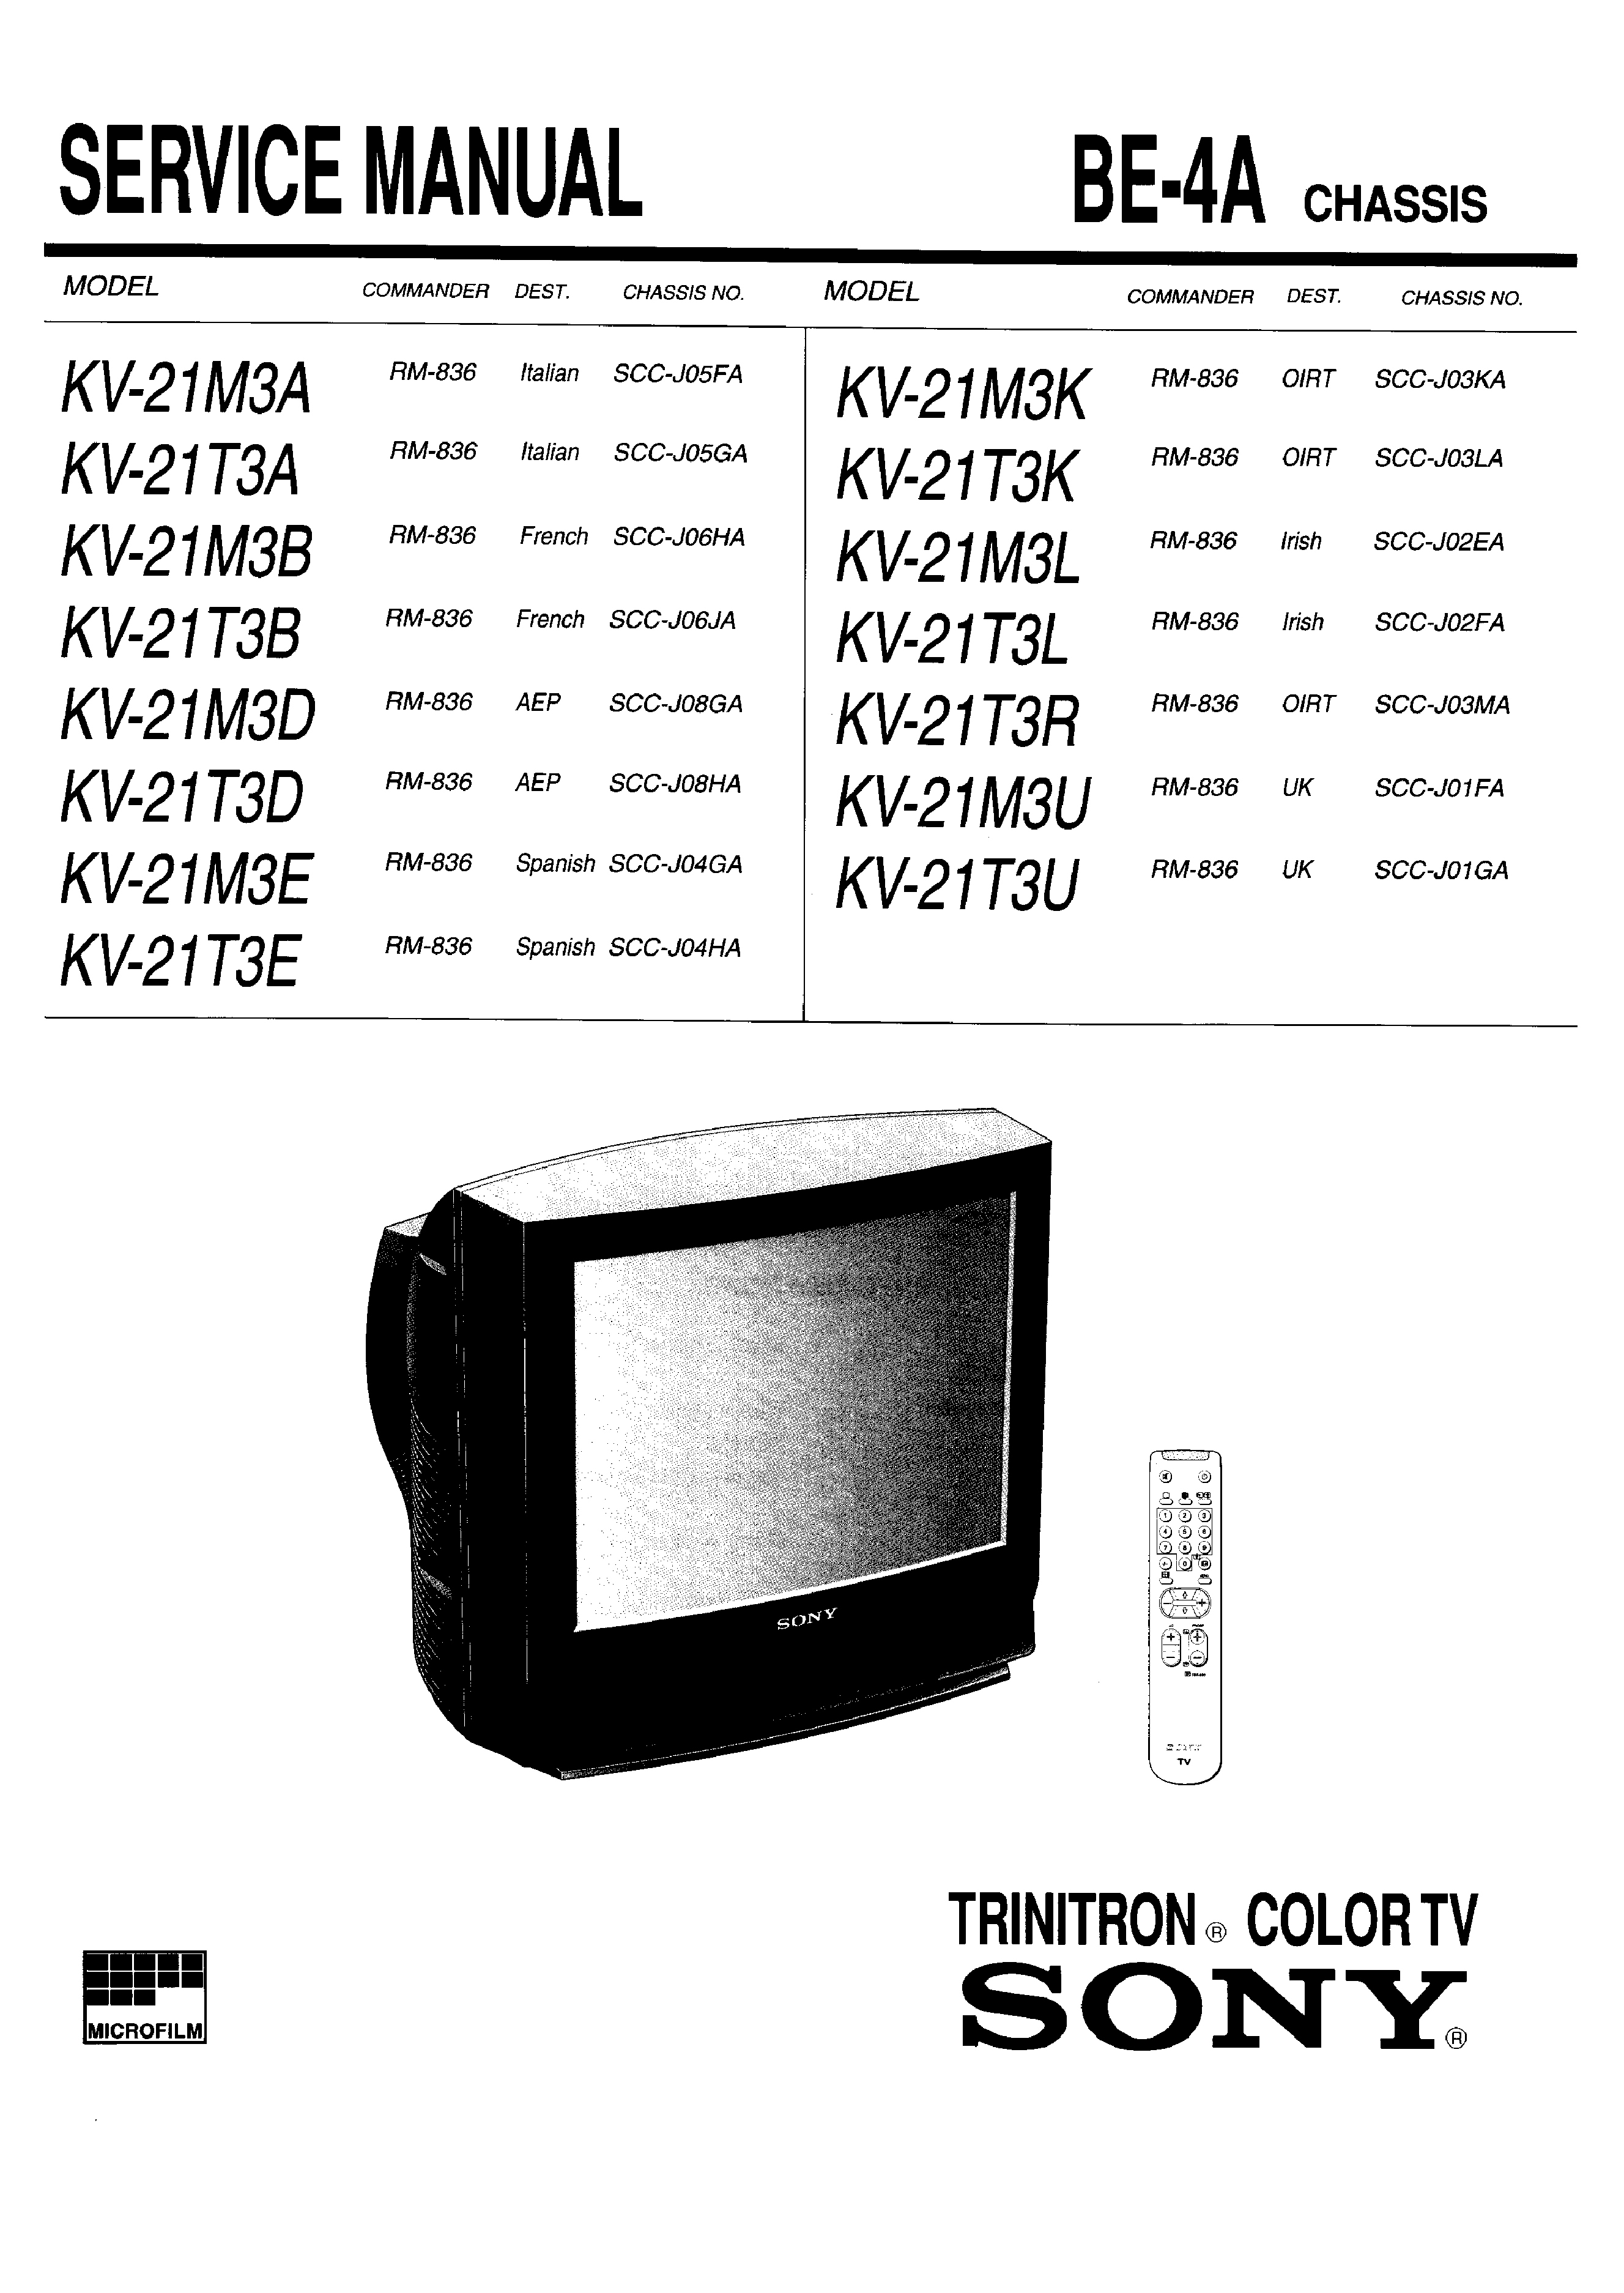 Монитор Sony Trinitron 19 Ремонт Описание Руководство Схема